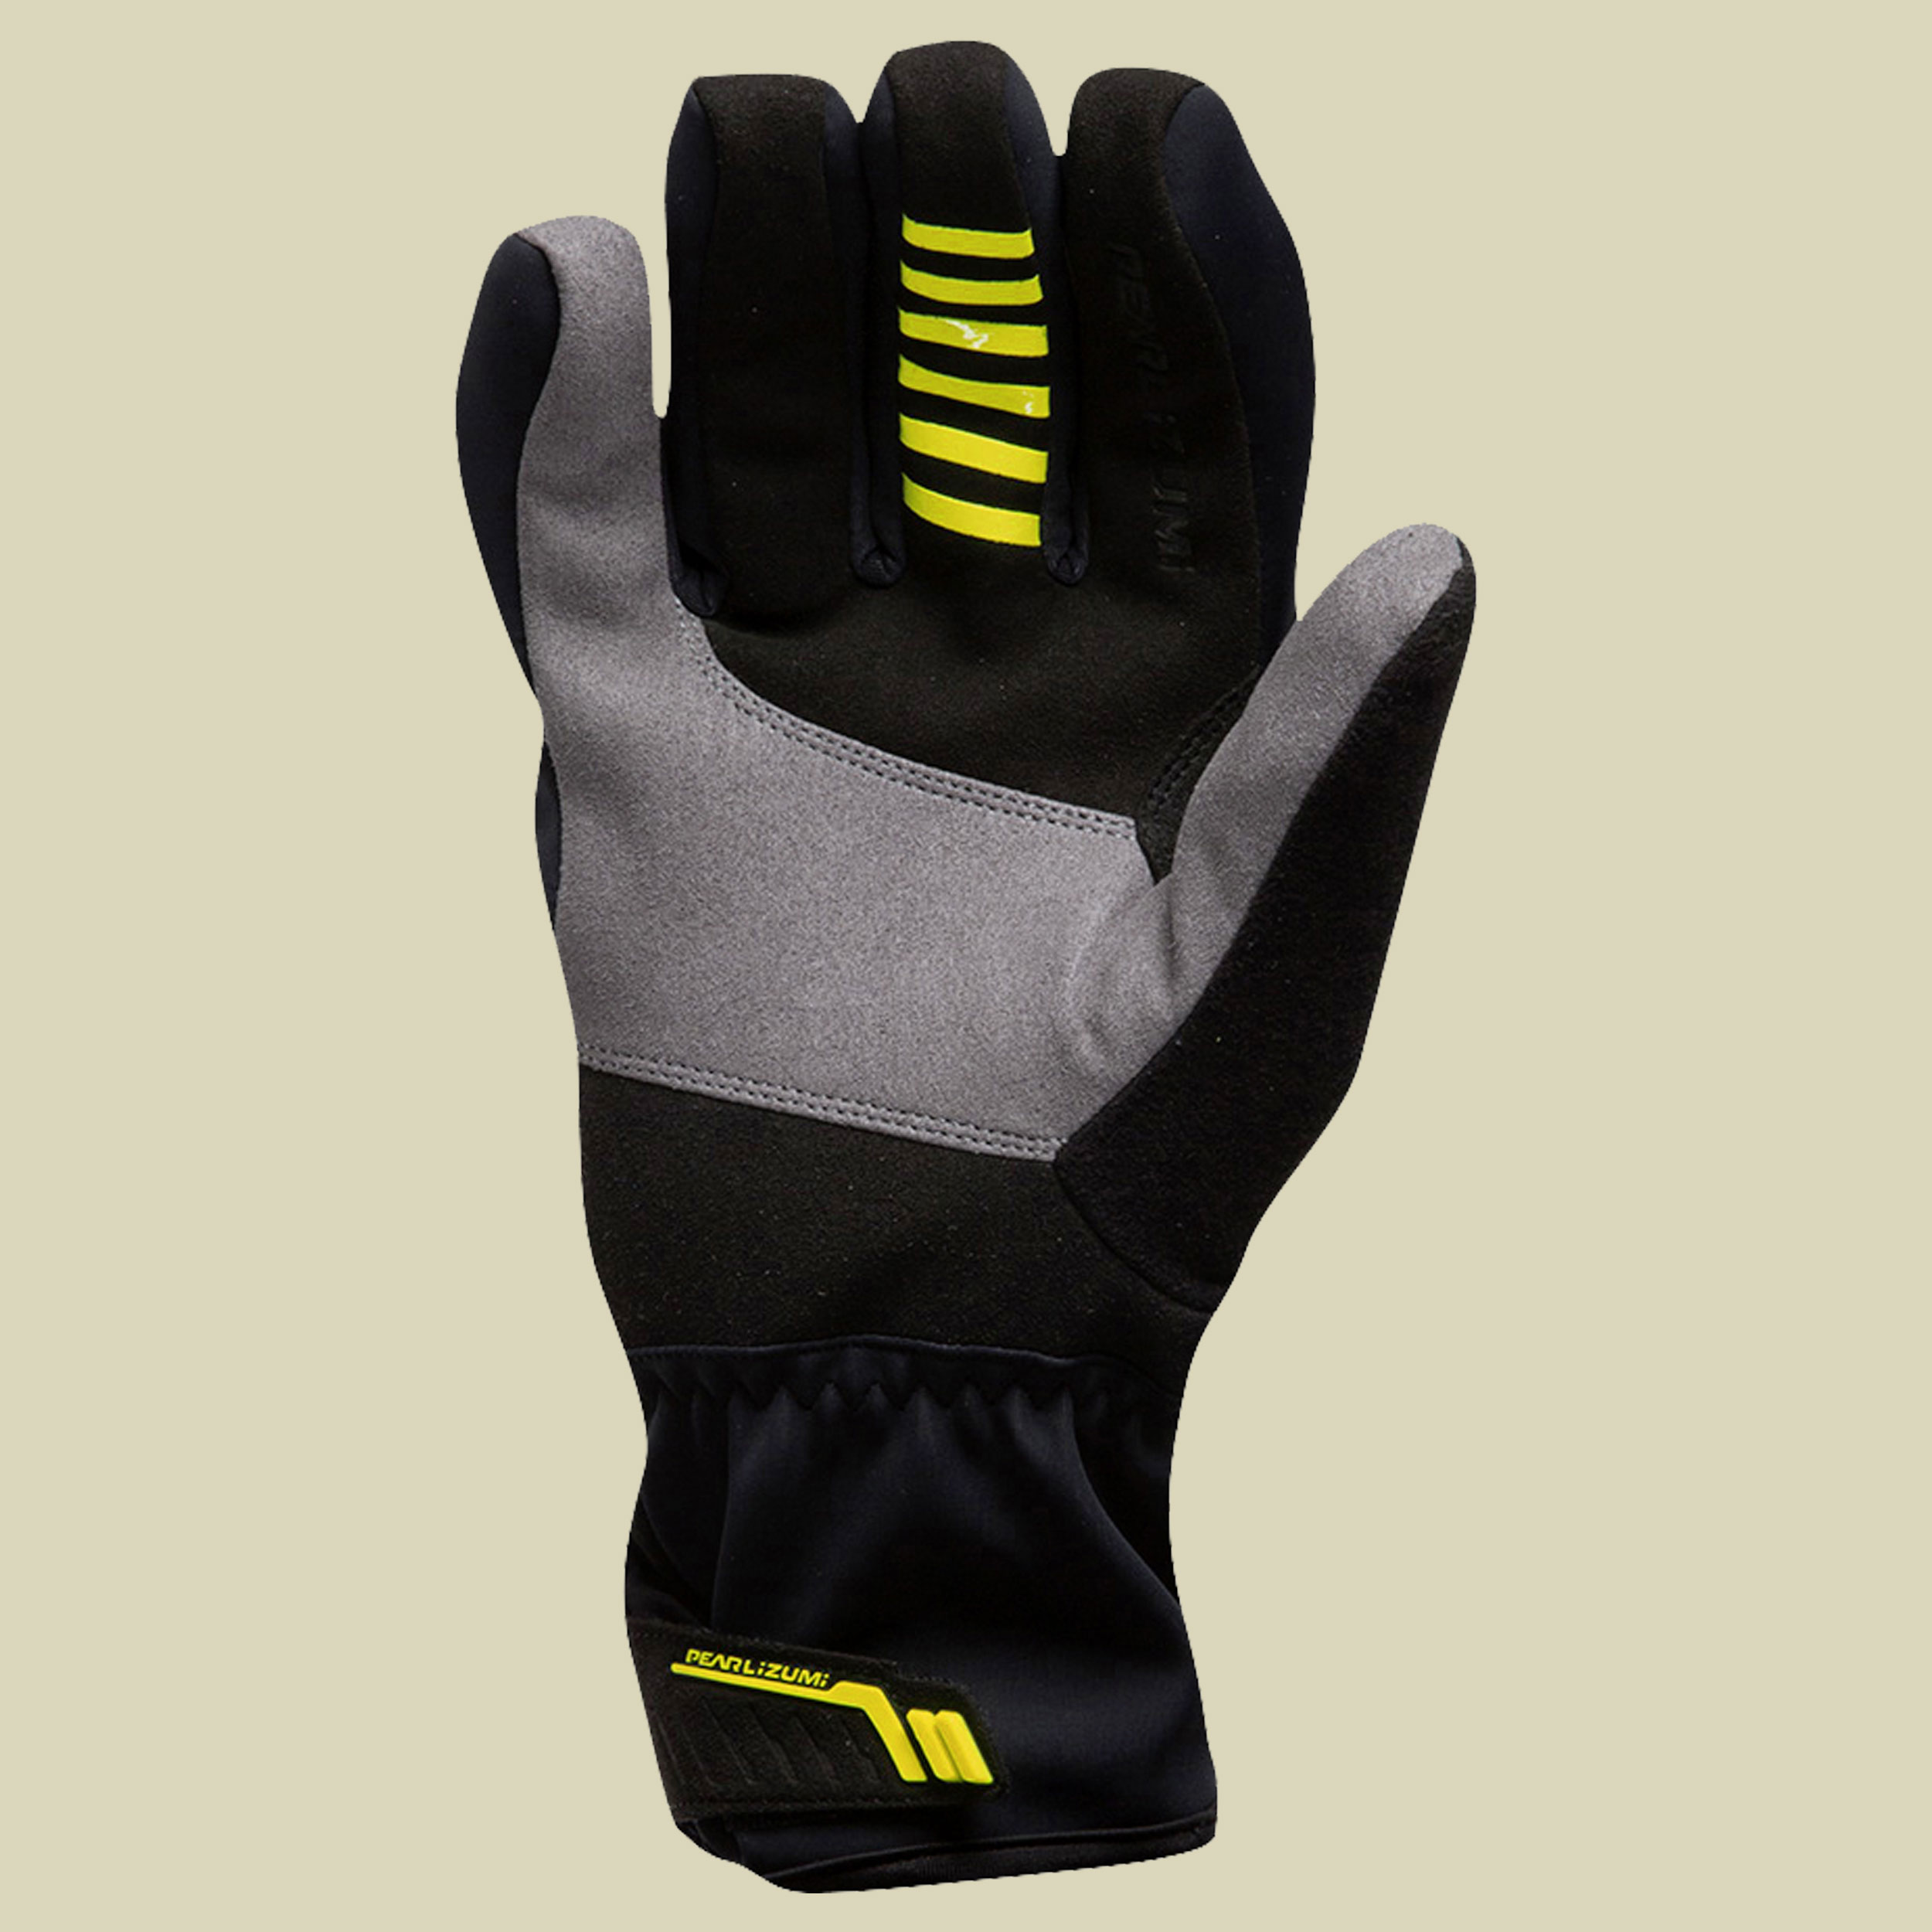 Pro AmFib Glove Größe L Farbe screaming yellow